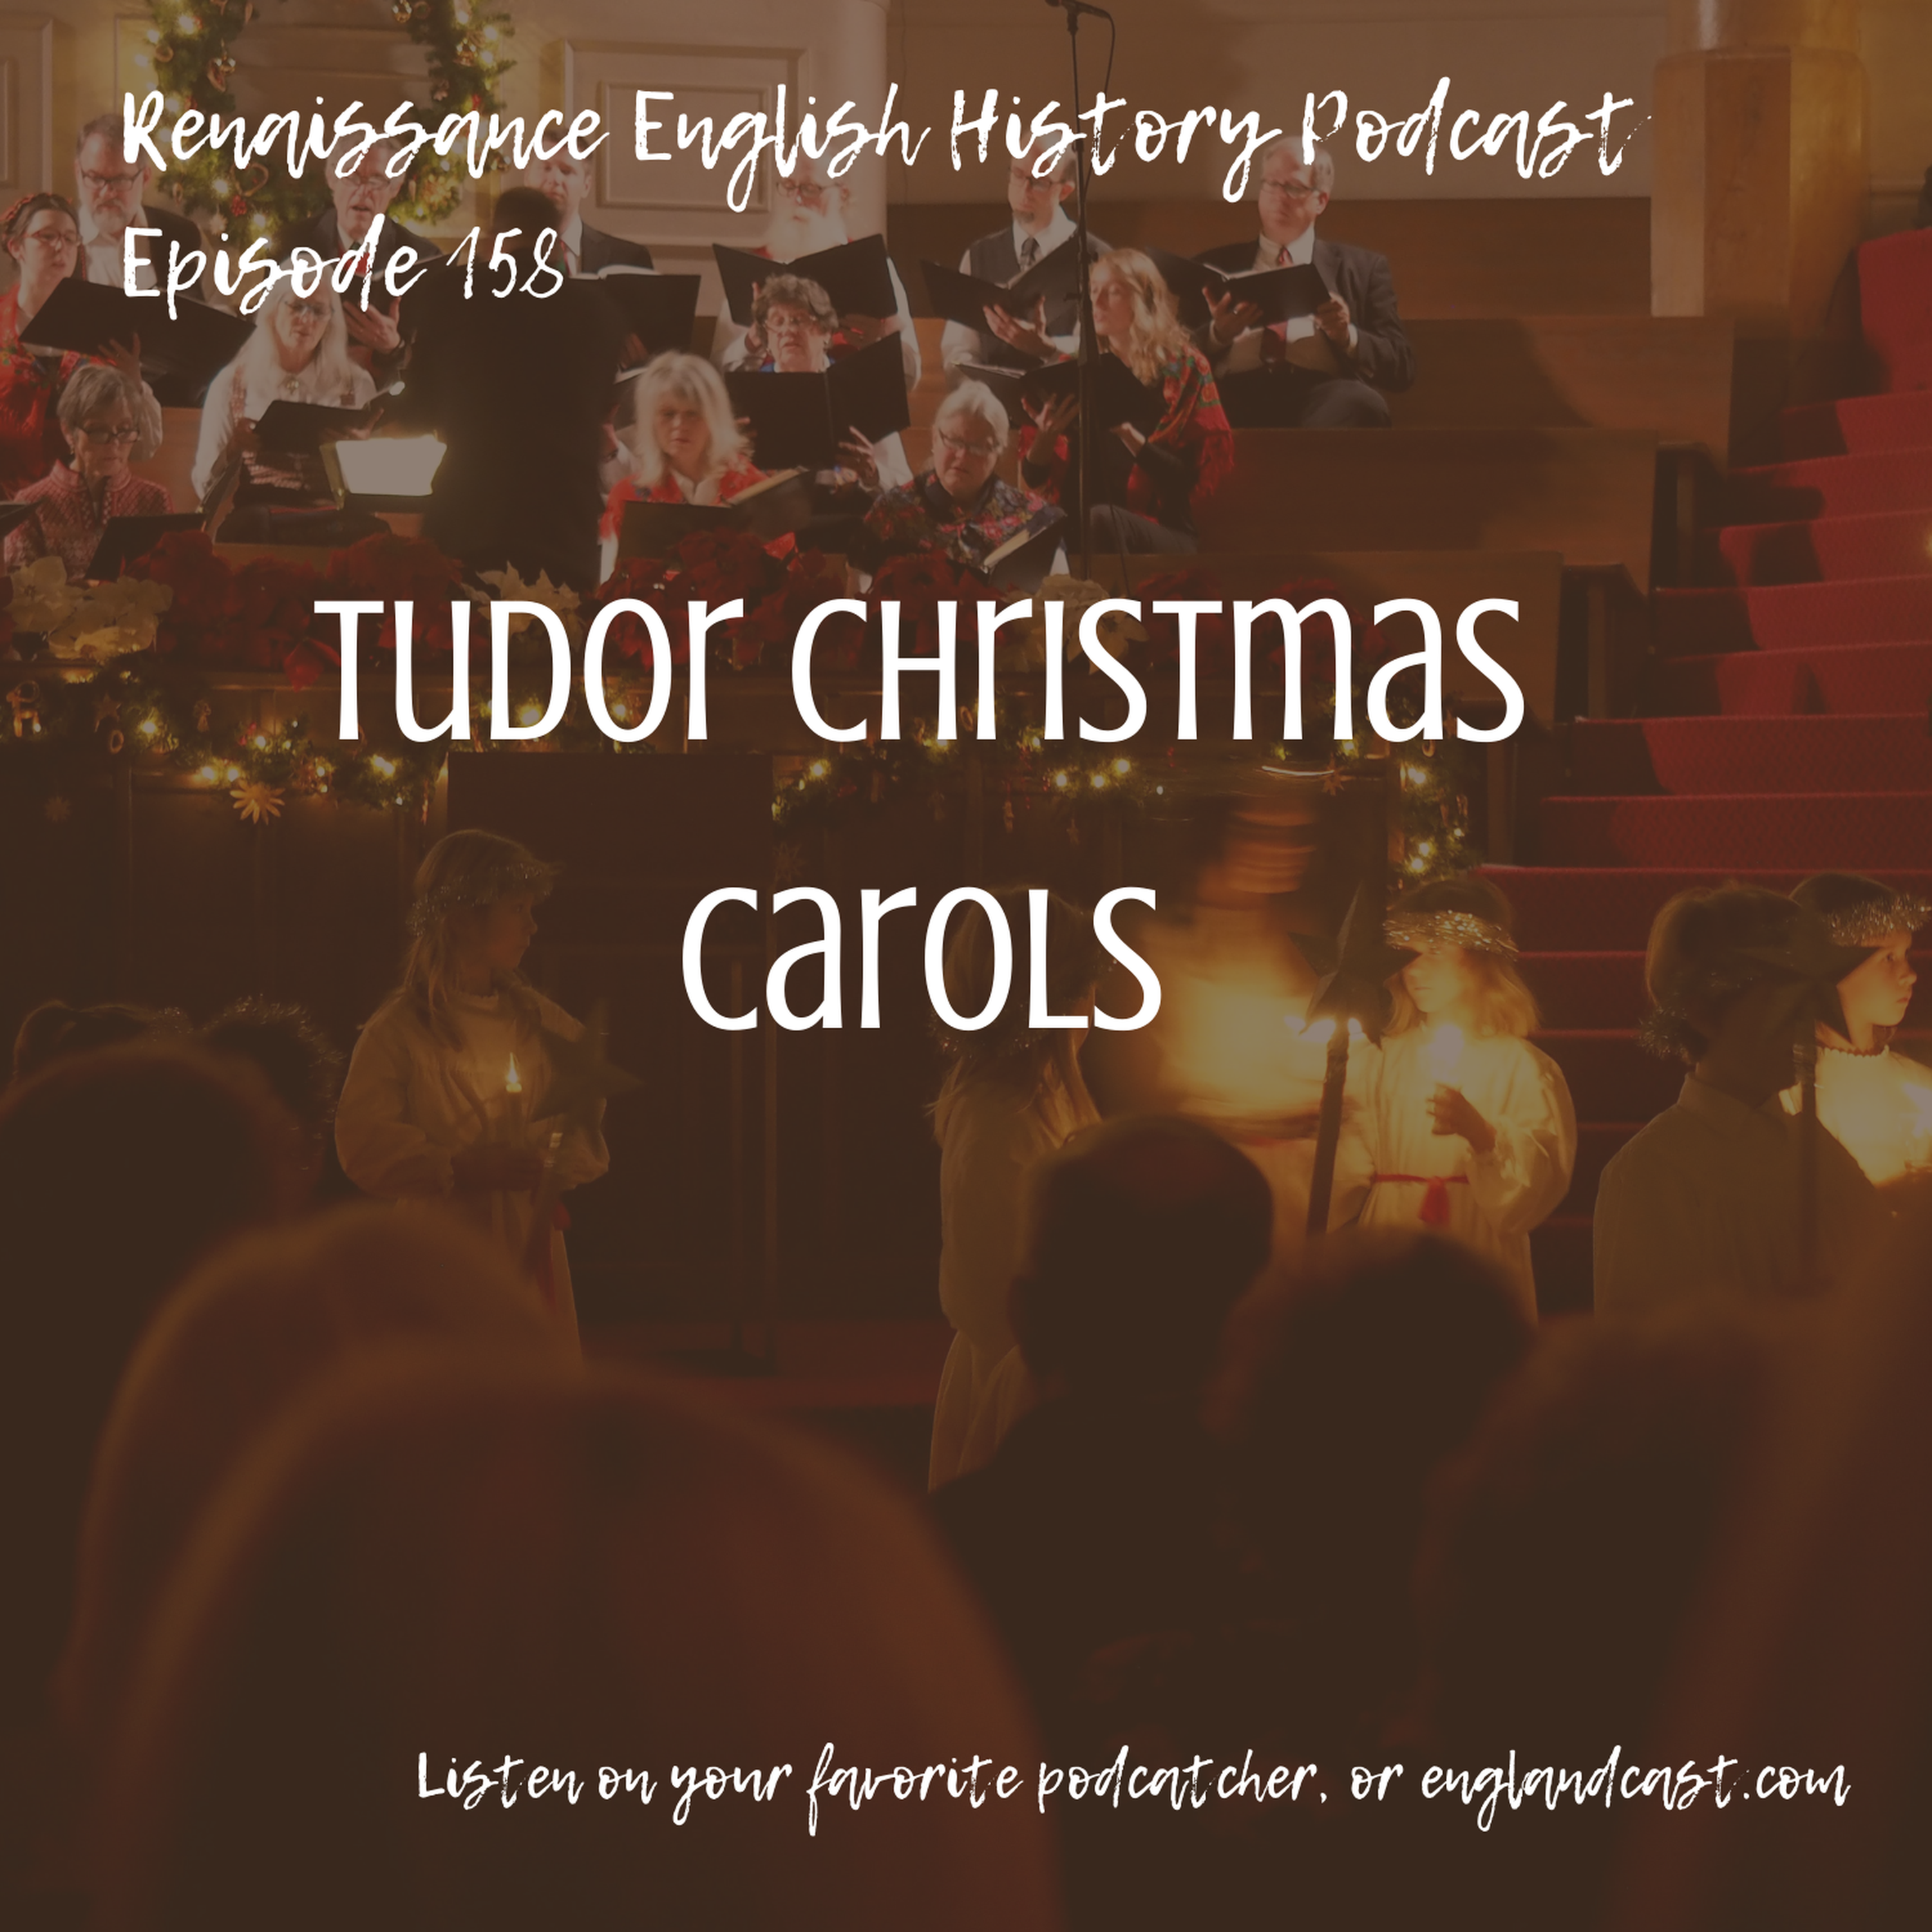 Supplemental: Tudor Christmas Carols